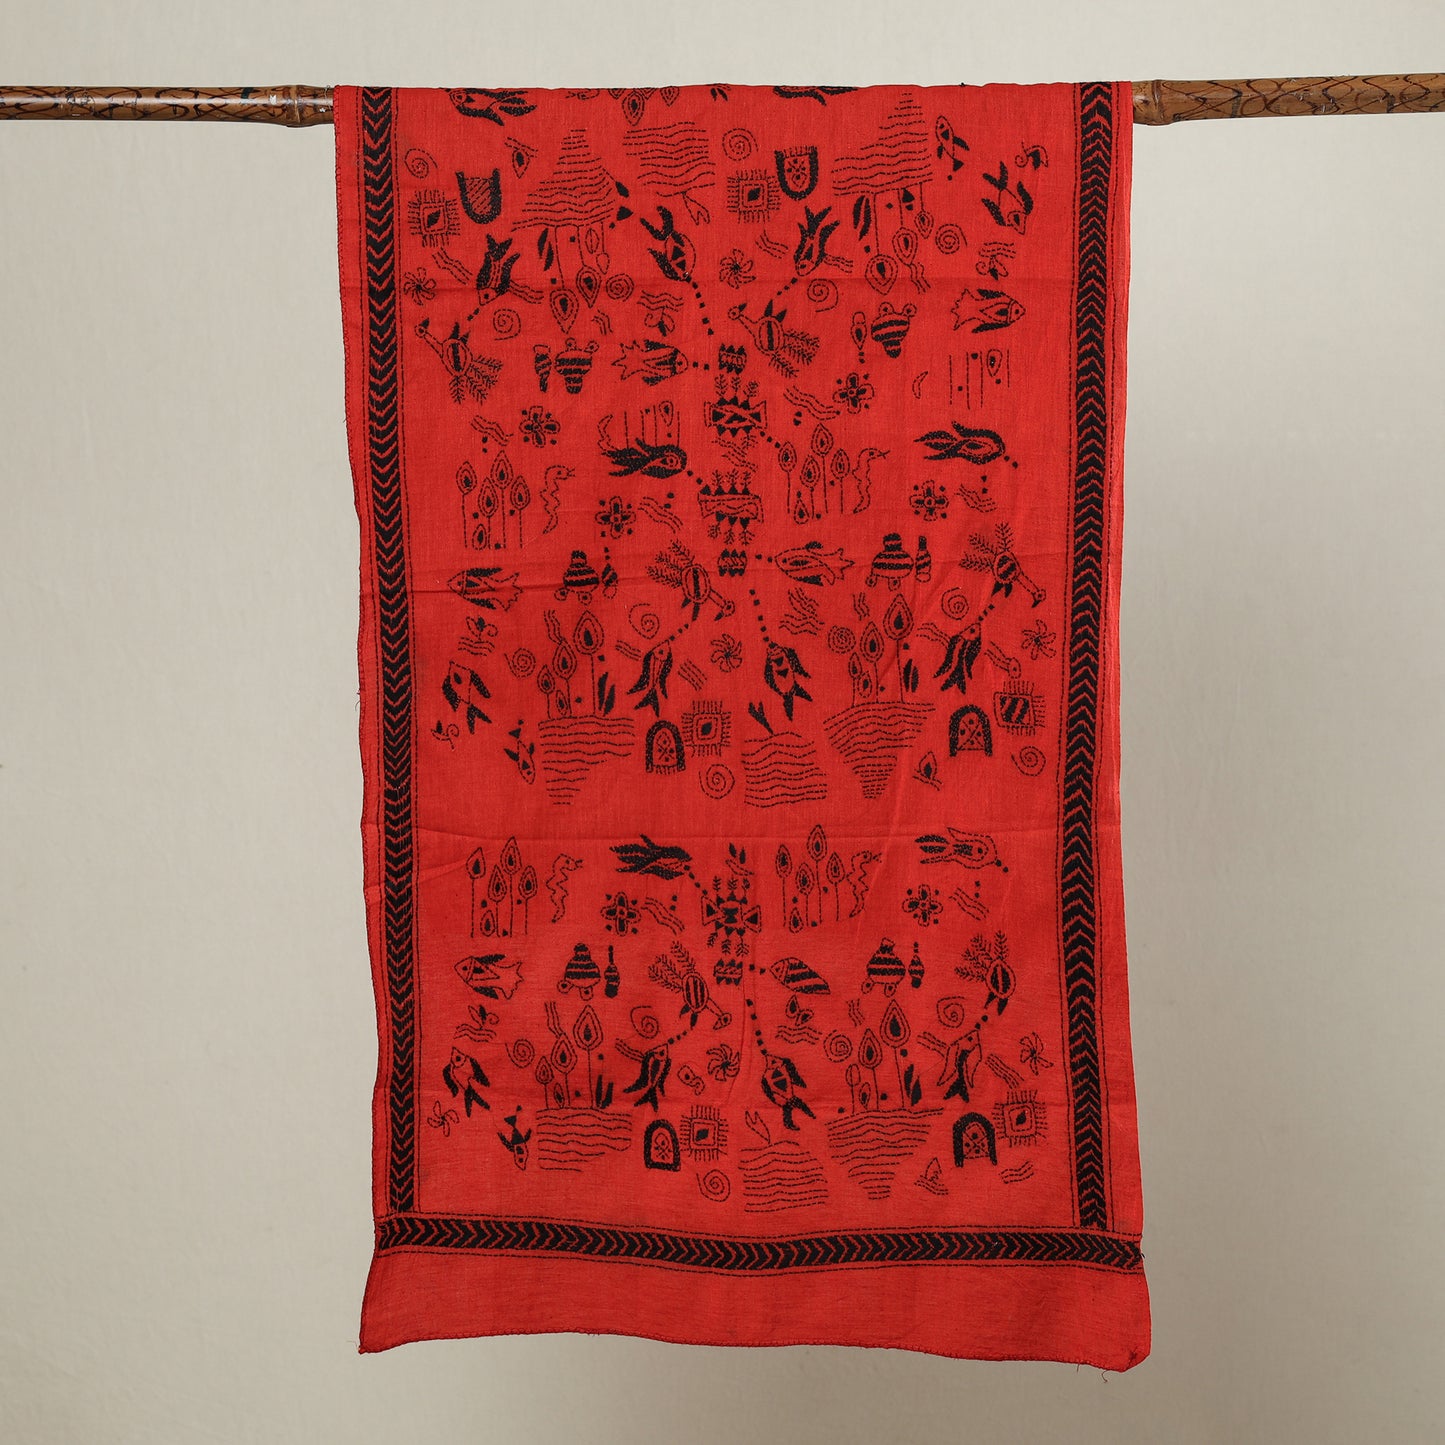 Orange - Bengal Kantha Hand Embroidery Cotton Stole 16